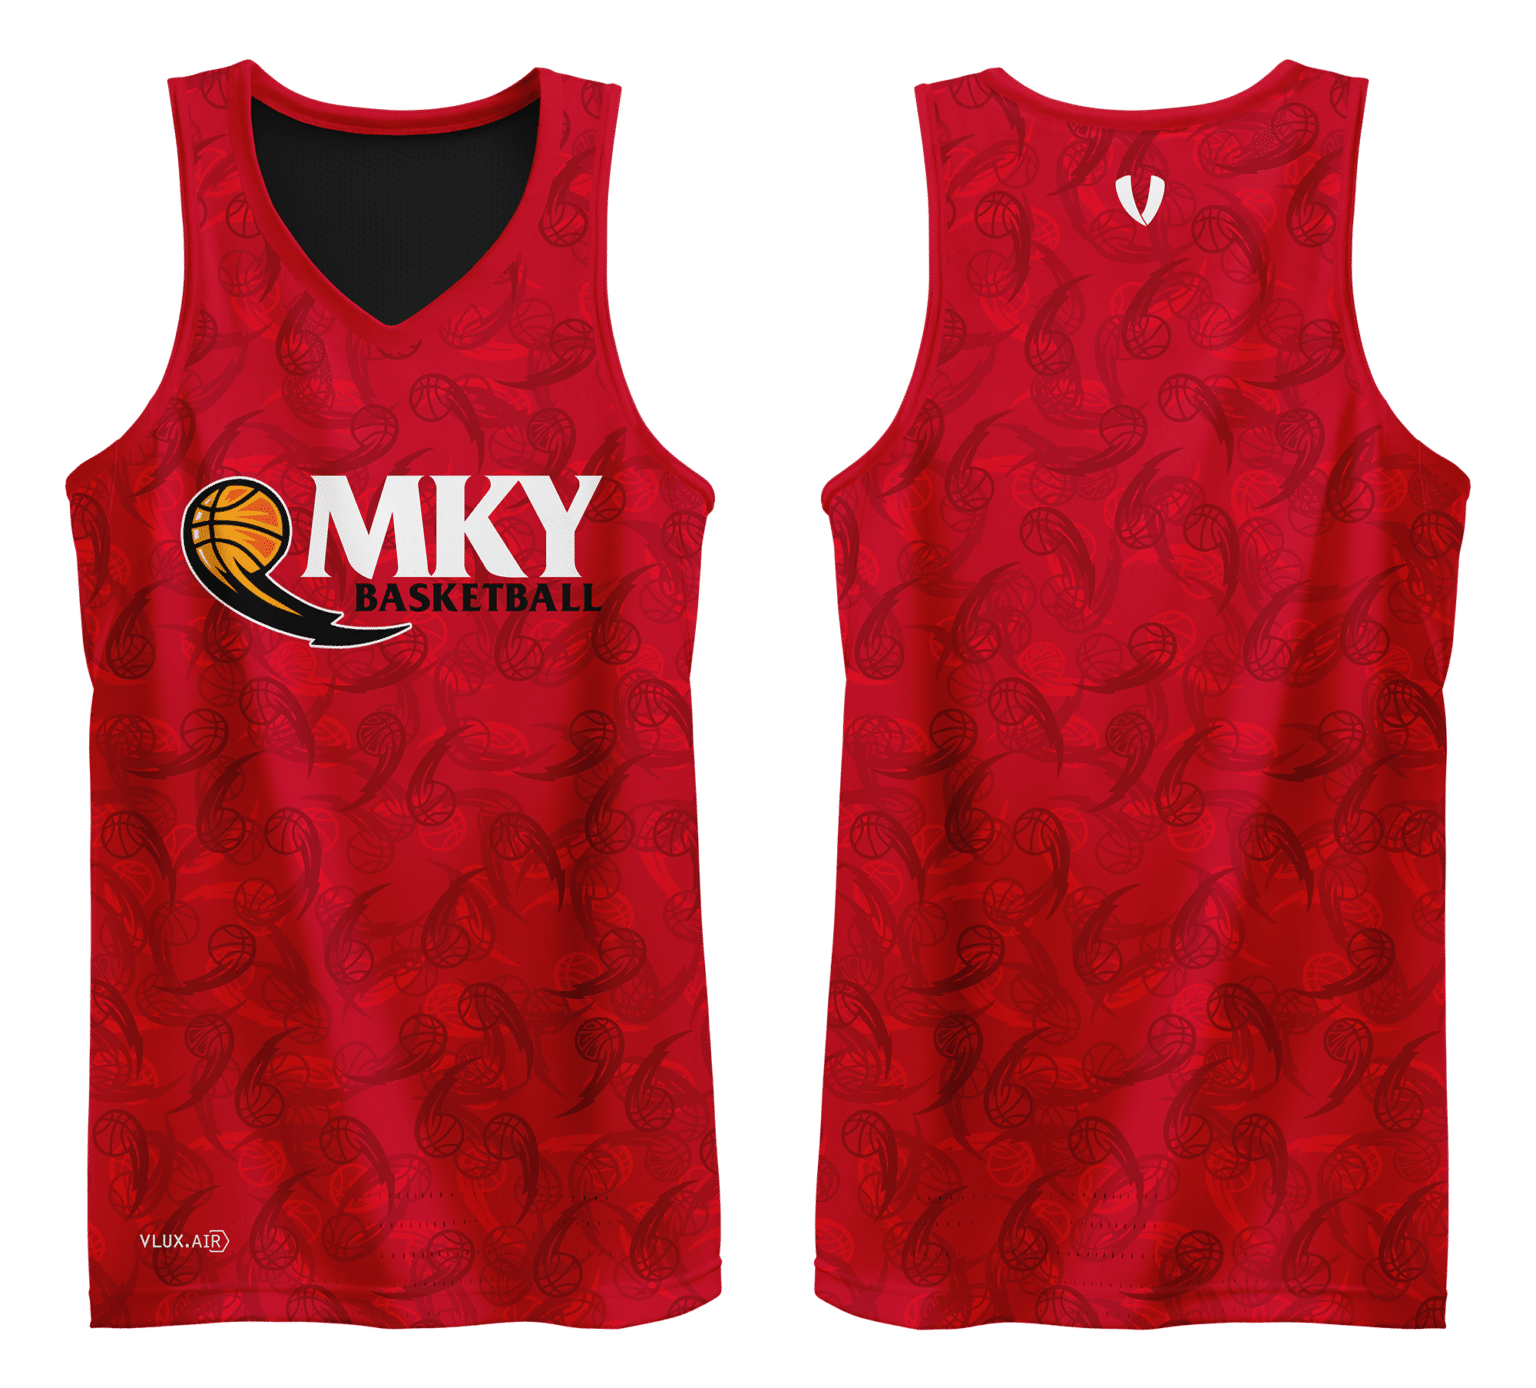 Mackay Basketball Reversible Training Jersey | Veto Sports